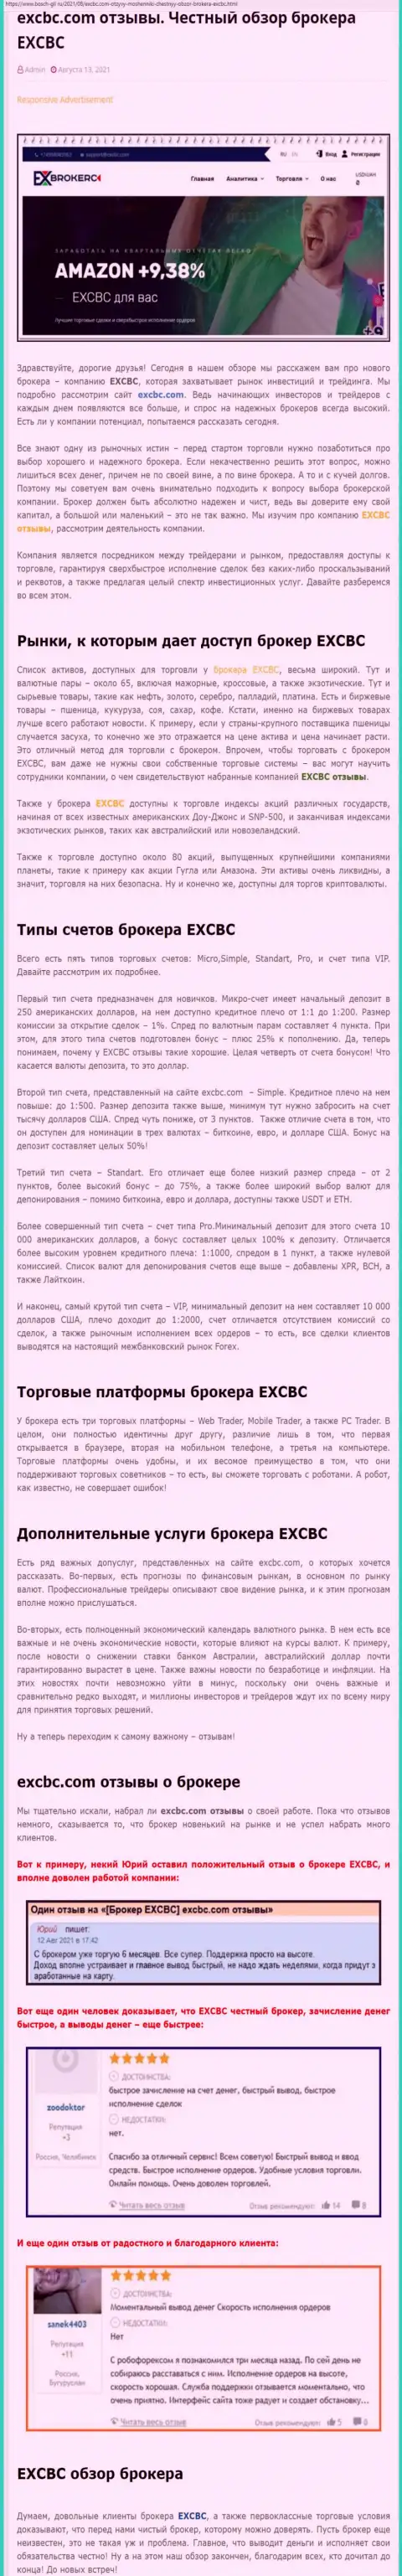 Публикация о форекс-дилере EXCHANGEBC Ltd Inc на web-сайте Bosch-Gll Ru